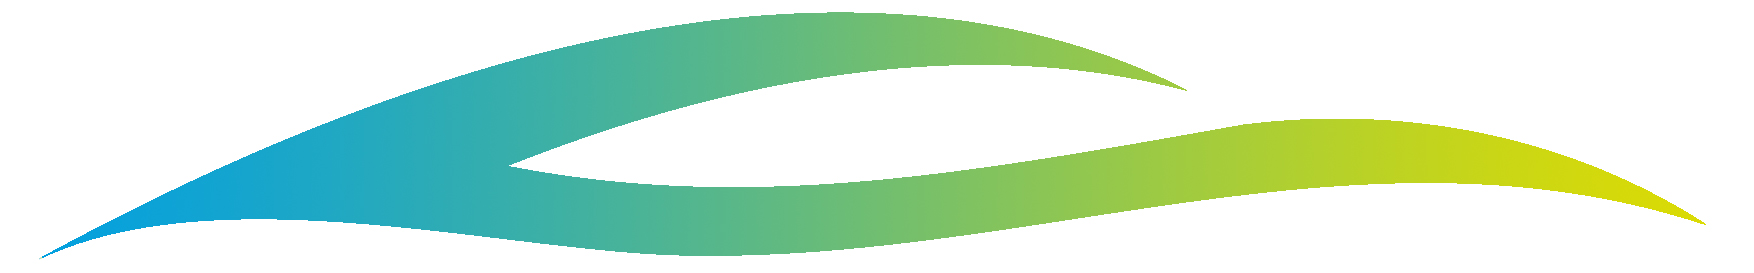 Logotipo iDocCar con fondo blanco